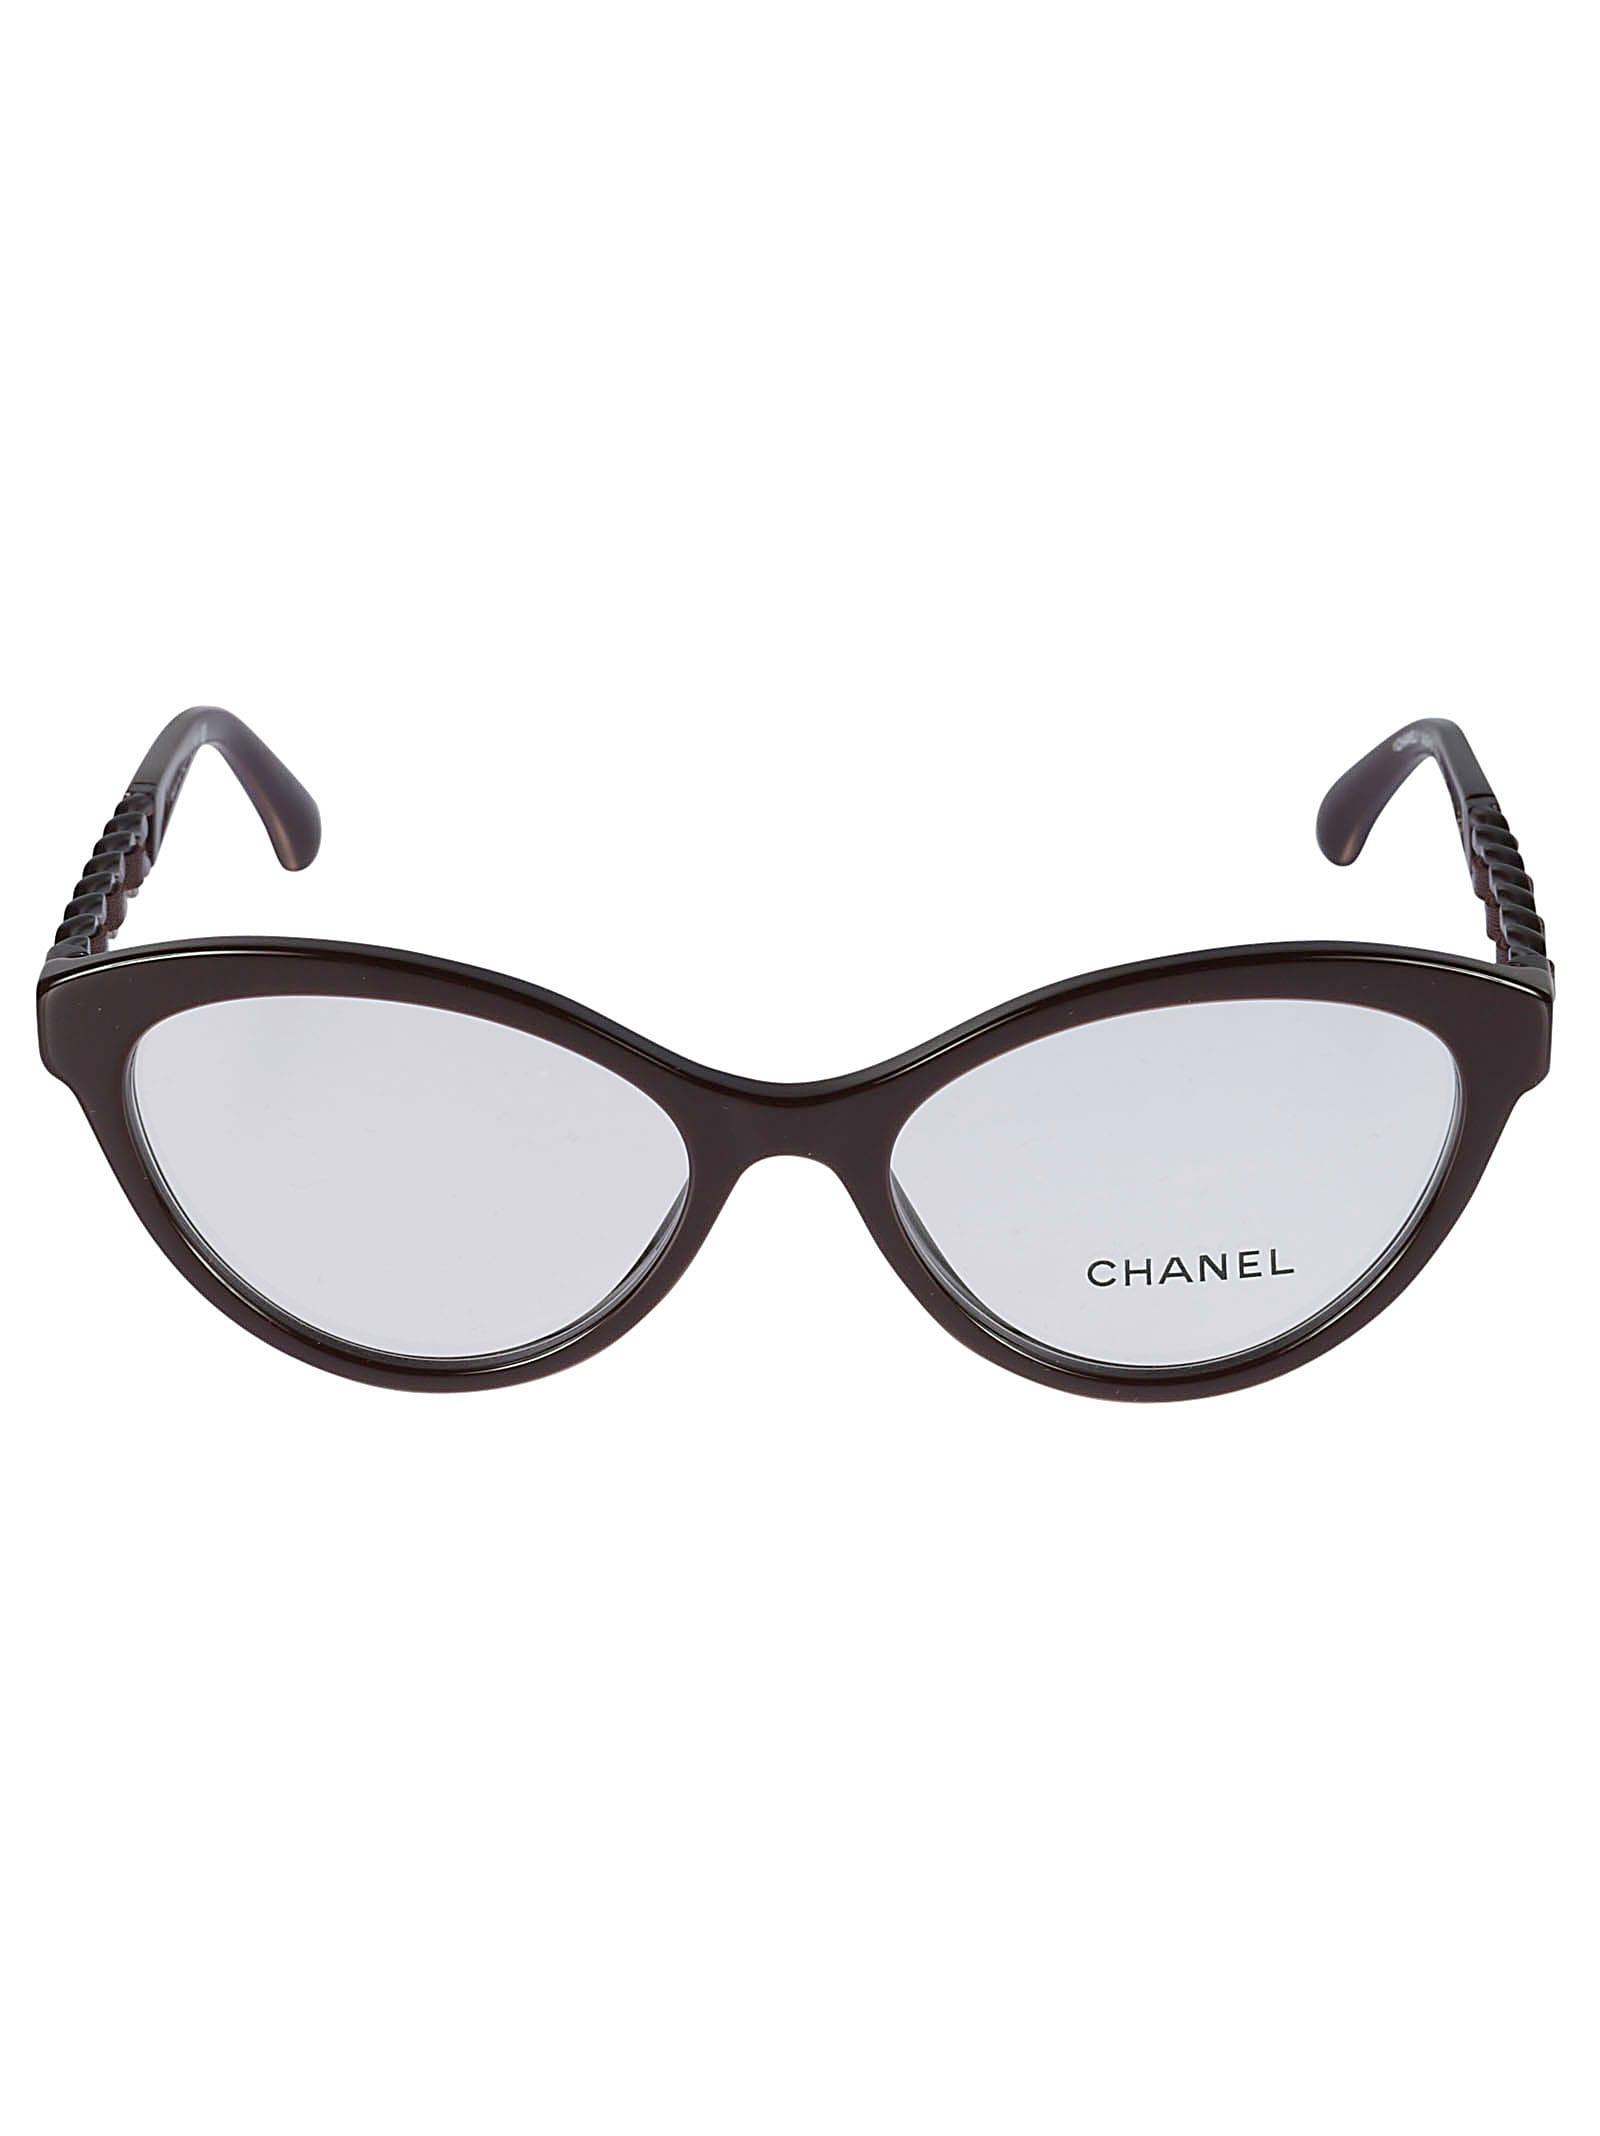 Chanel 3436 Glasses (Brown - Cat Eye - Women)